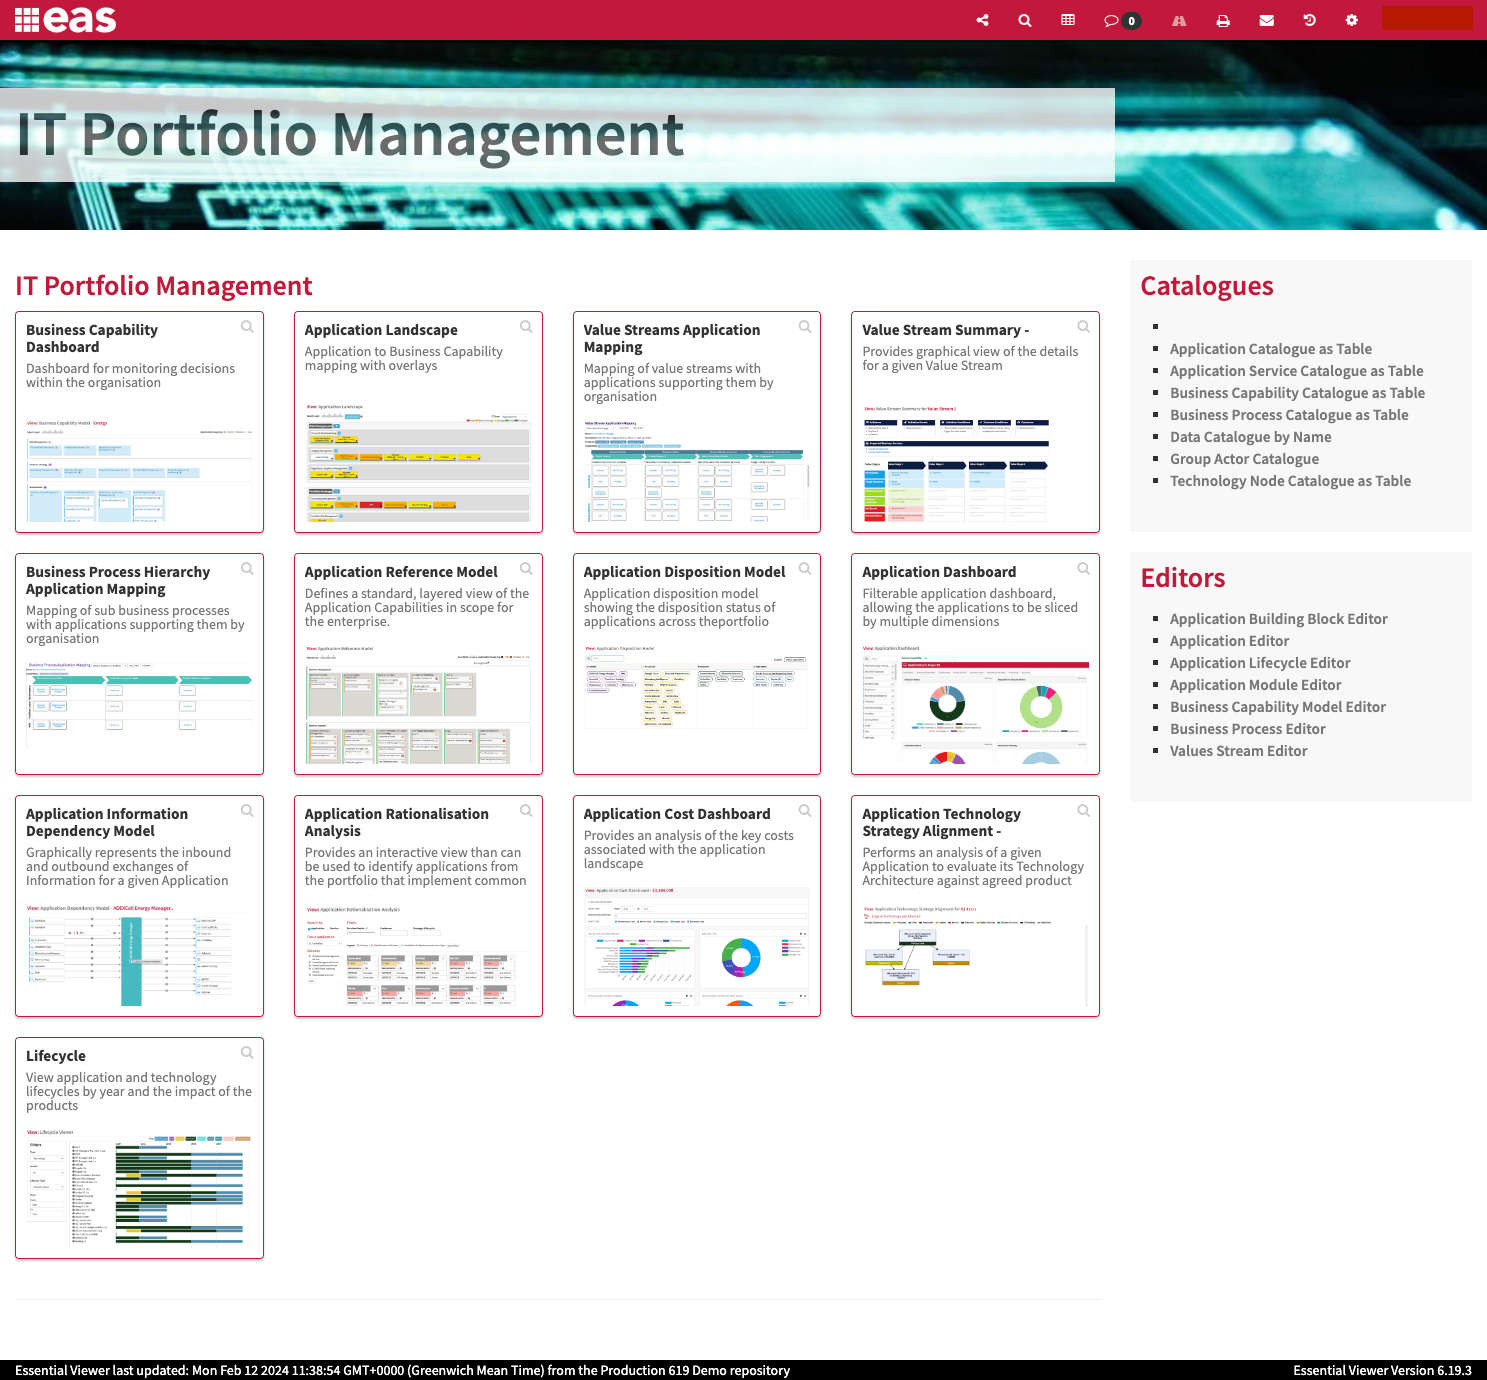 IT Portfolio Management Portal